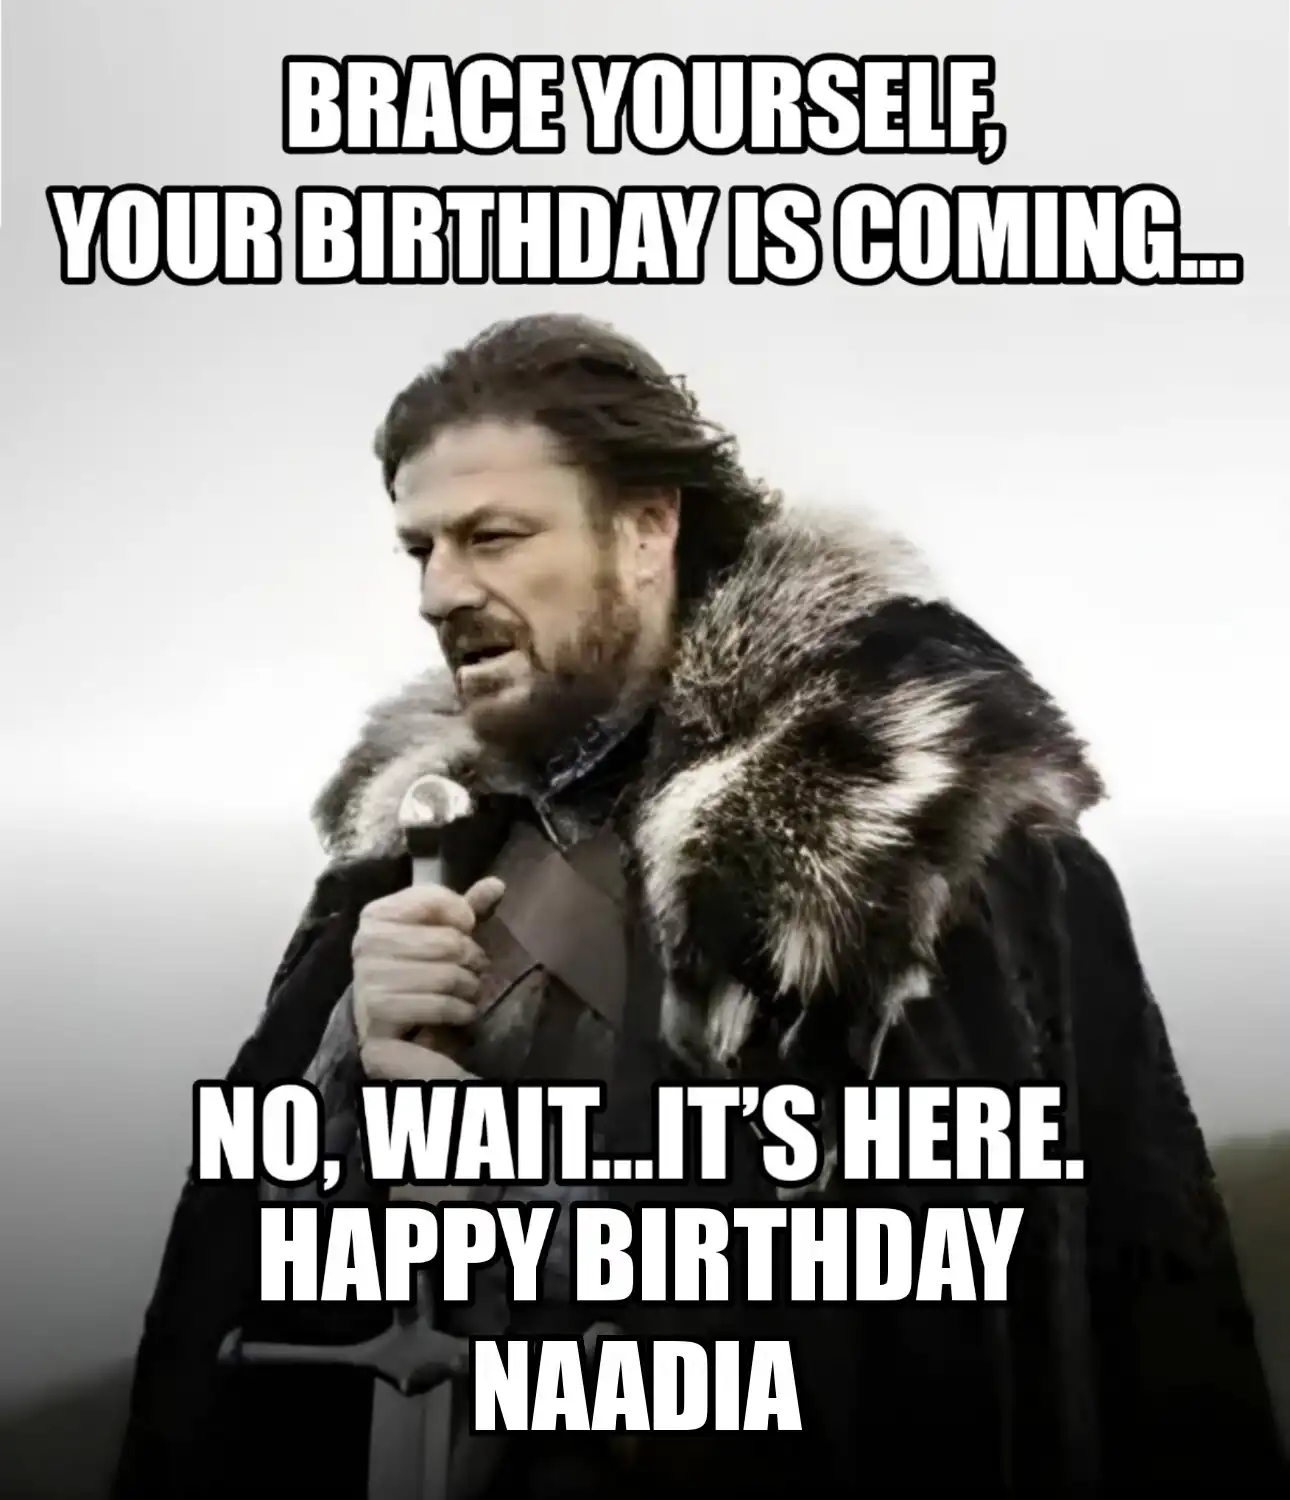 Happy Birthday Naadia Brace Yourself Your Birthday Is Coming Meme